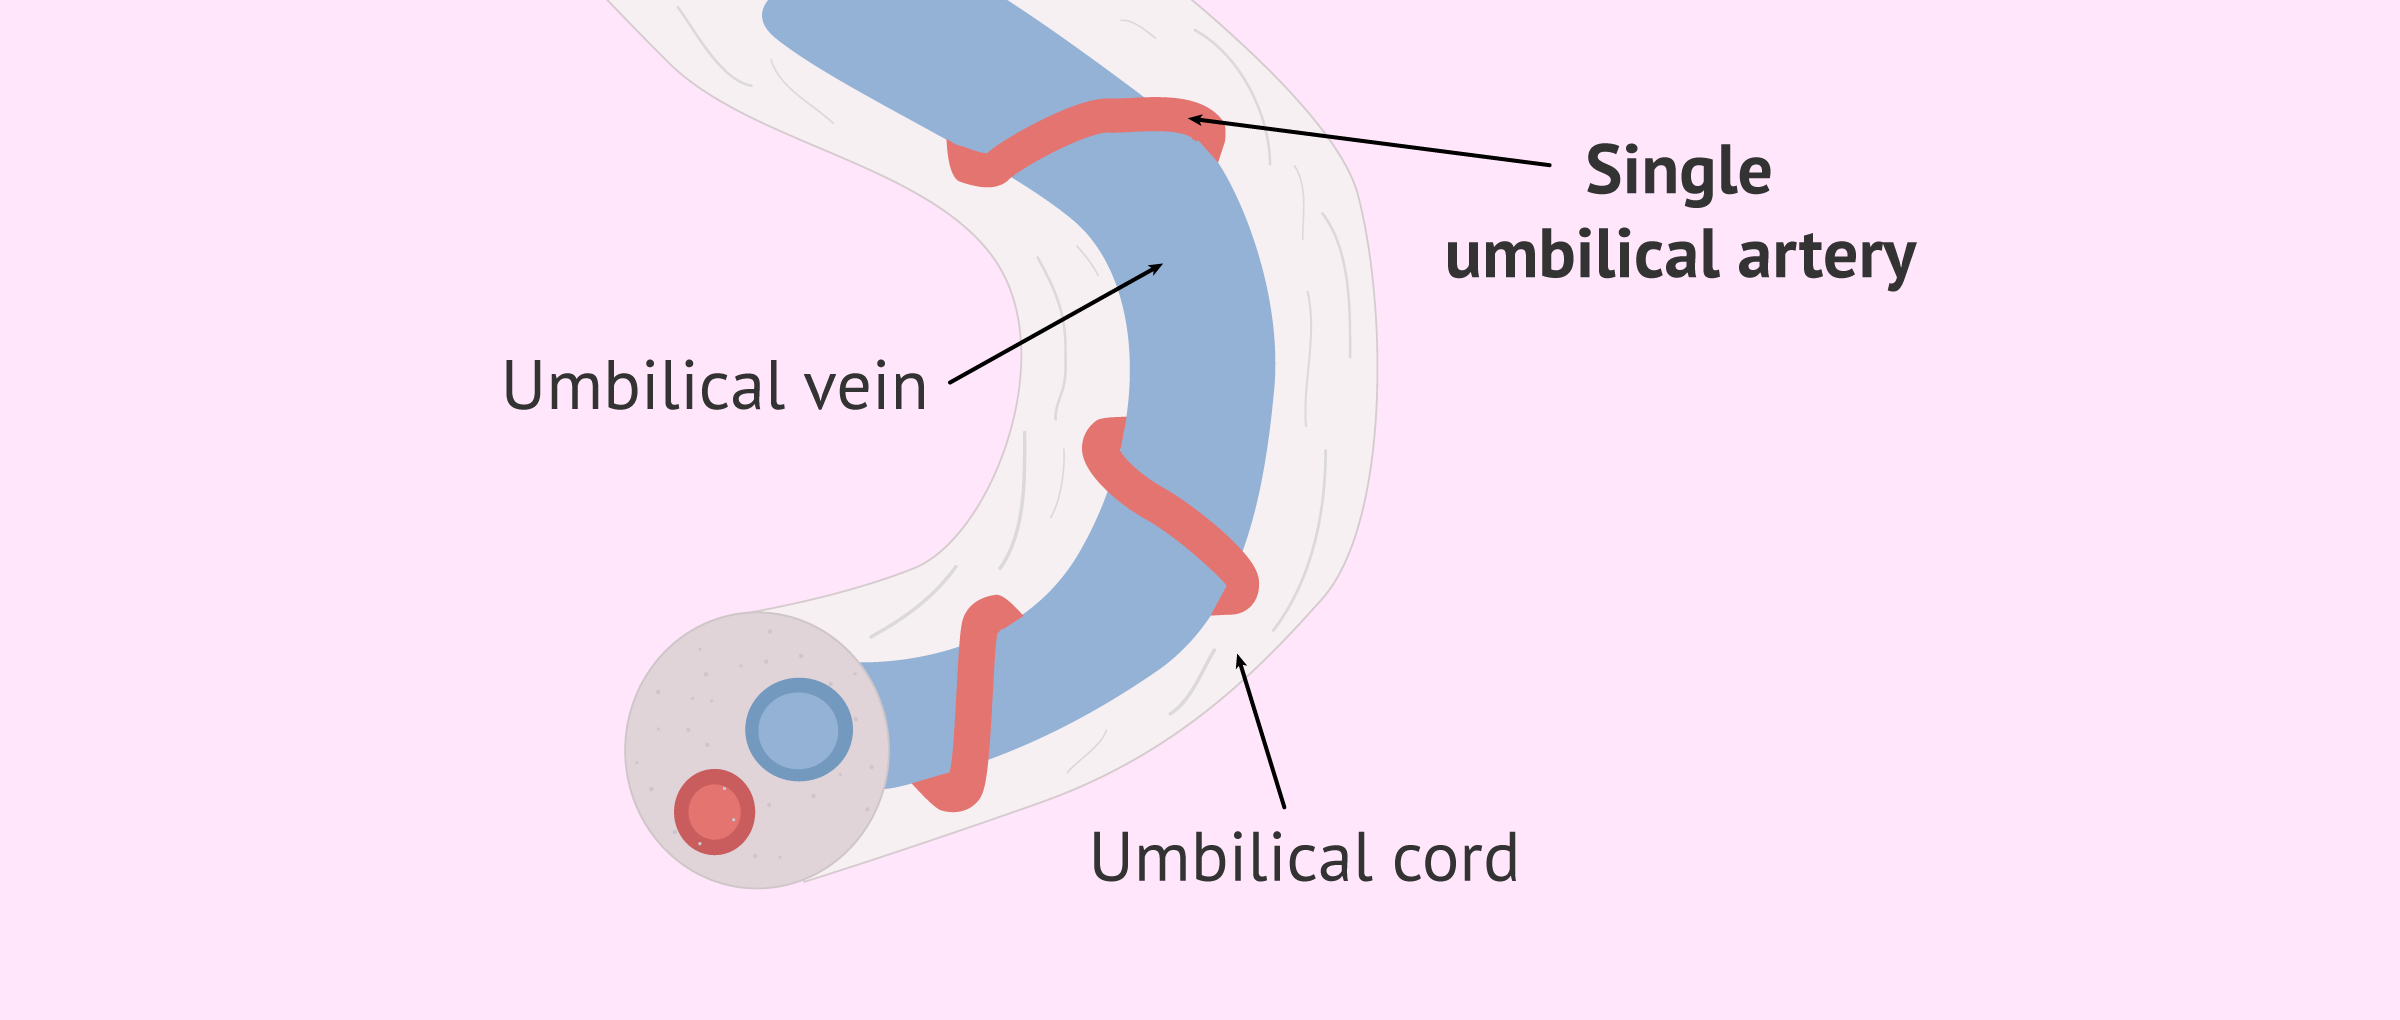 Umbilical cord anomalies - single umbilical artery